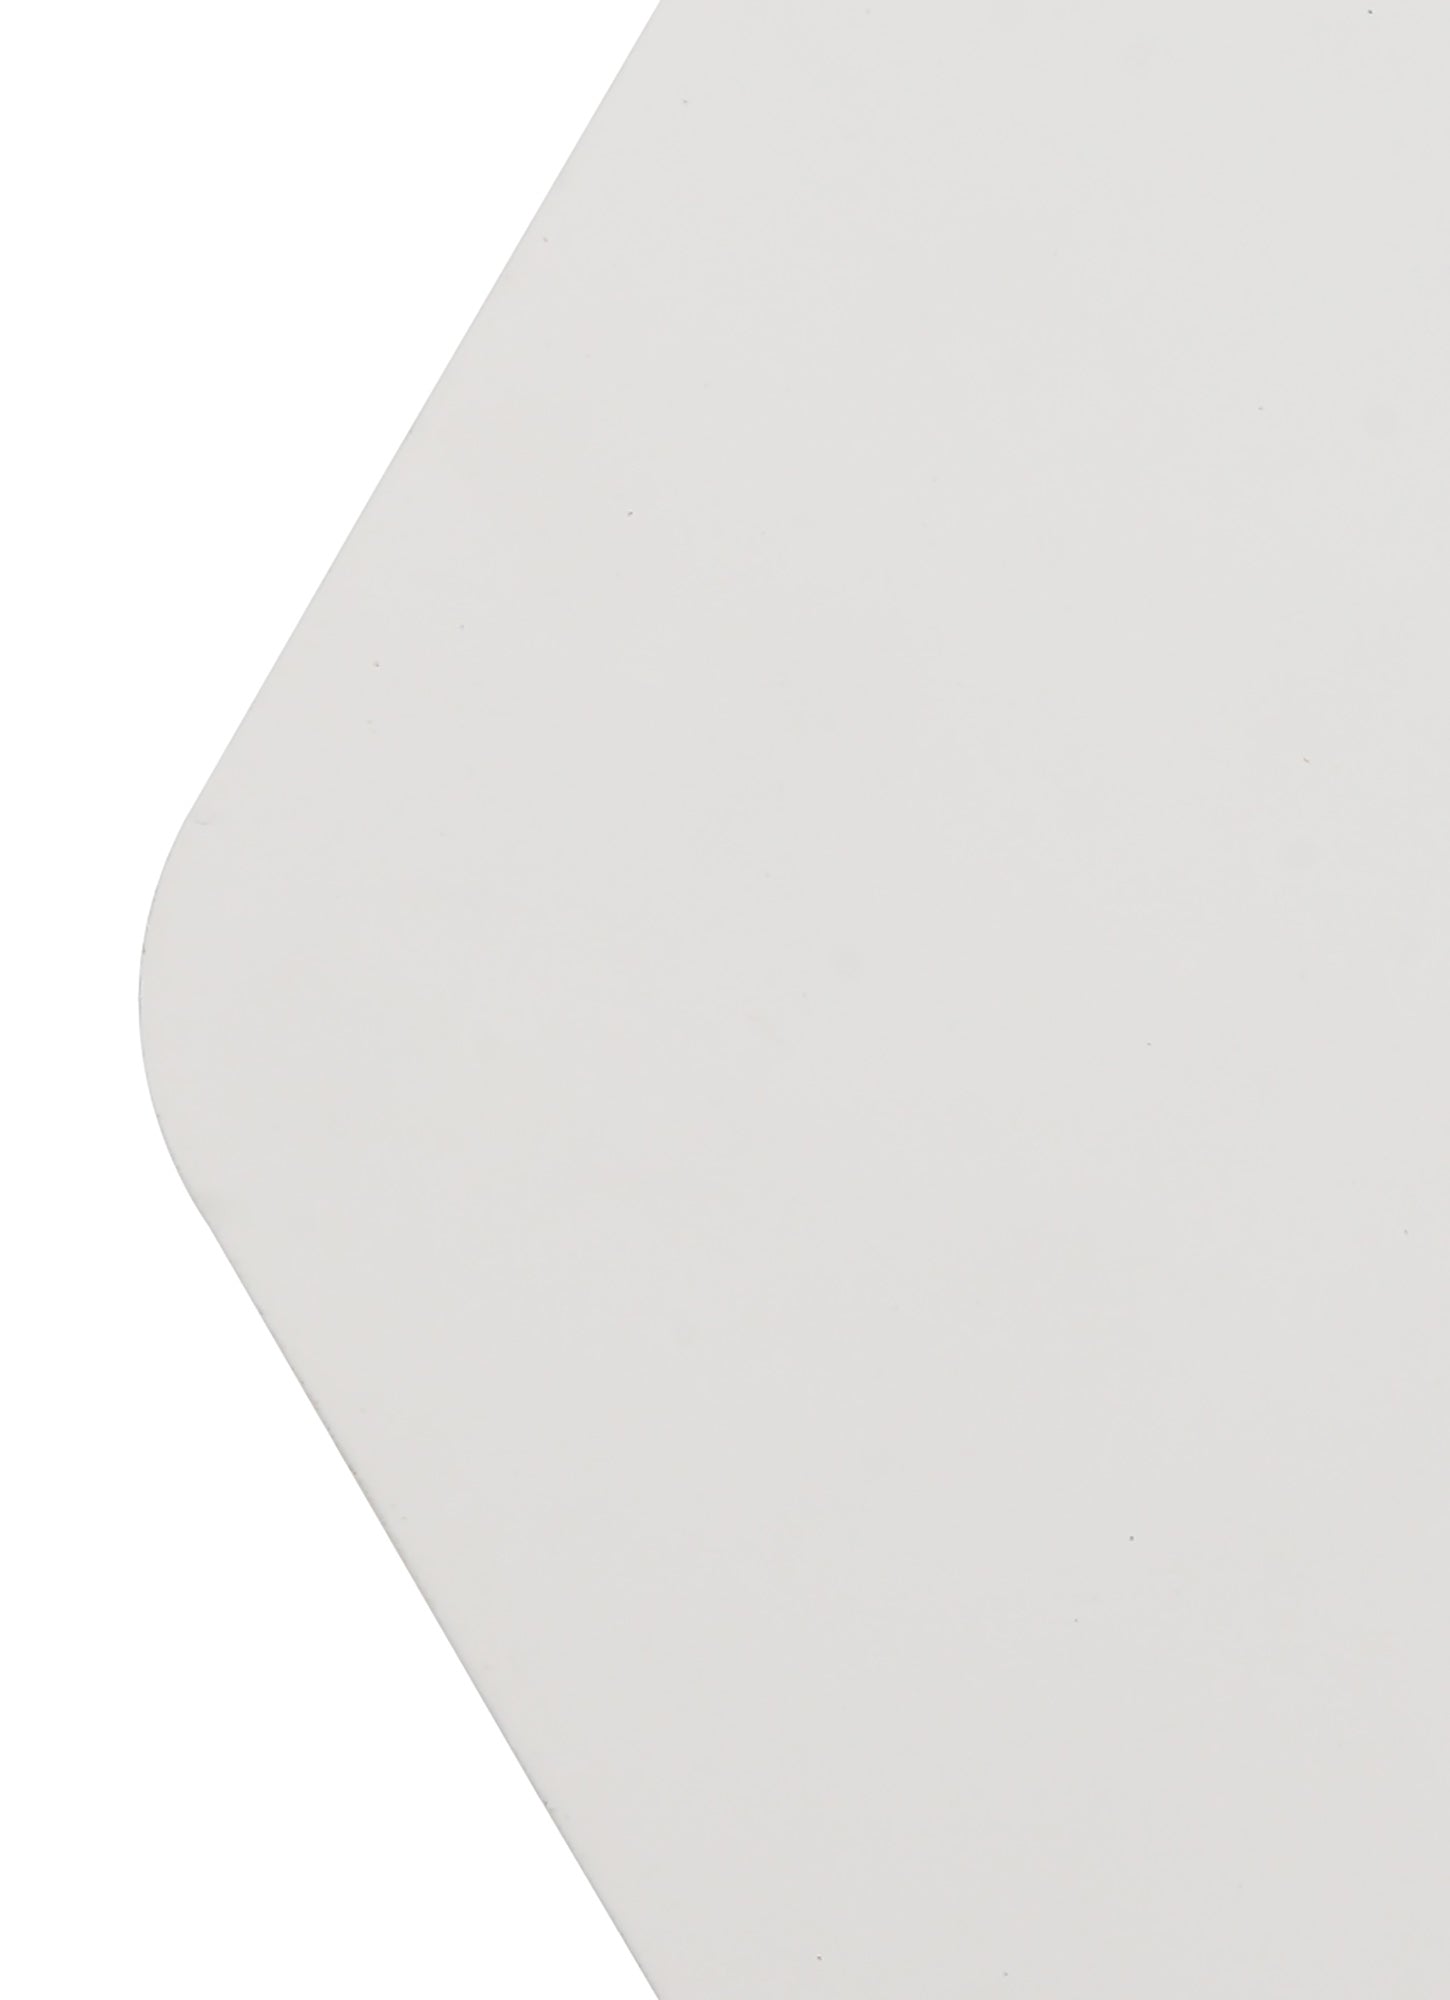 Modus 200mm Non-Electric Hexagonal Plate, Sand White